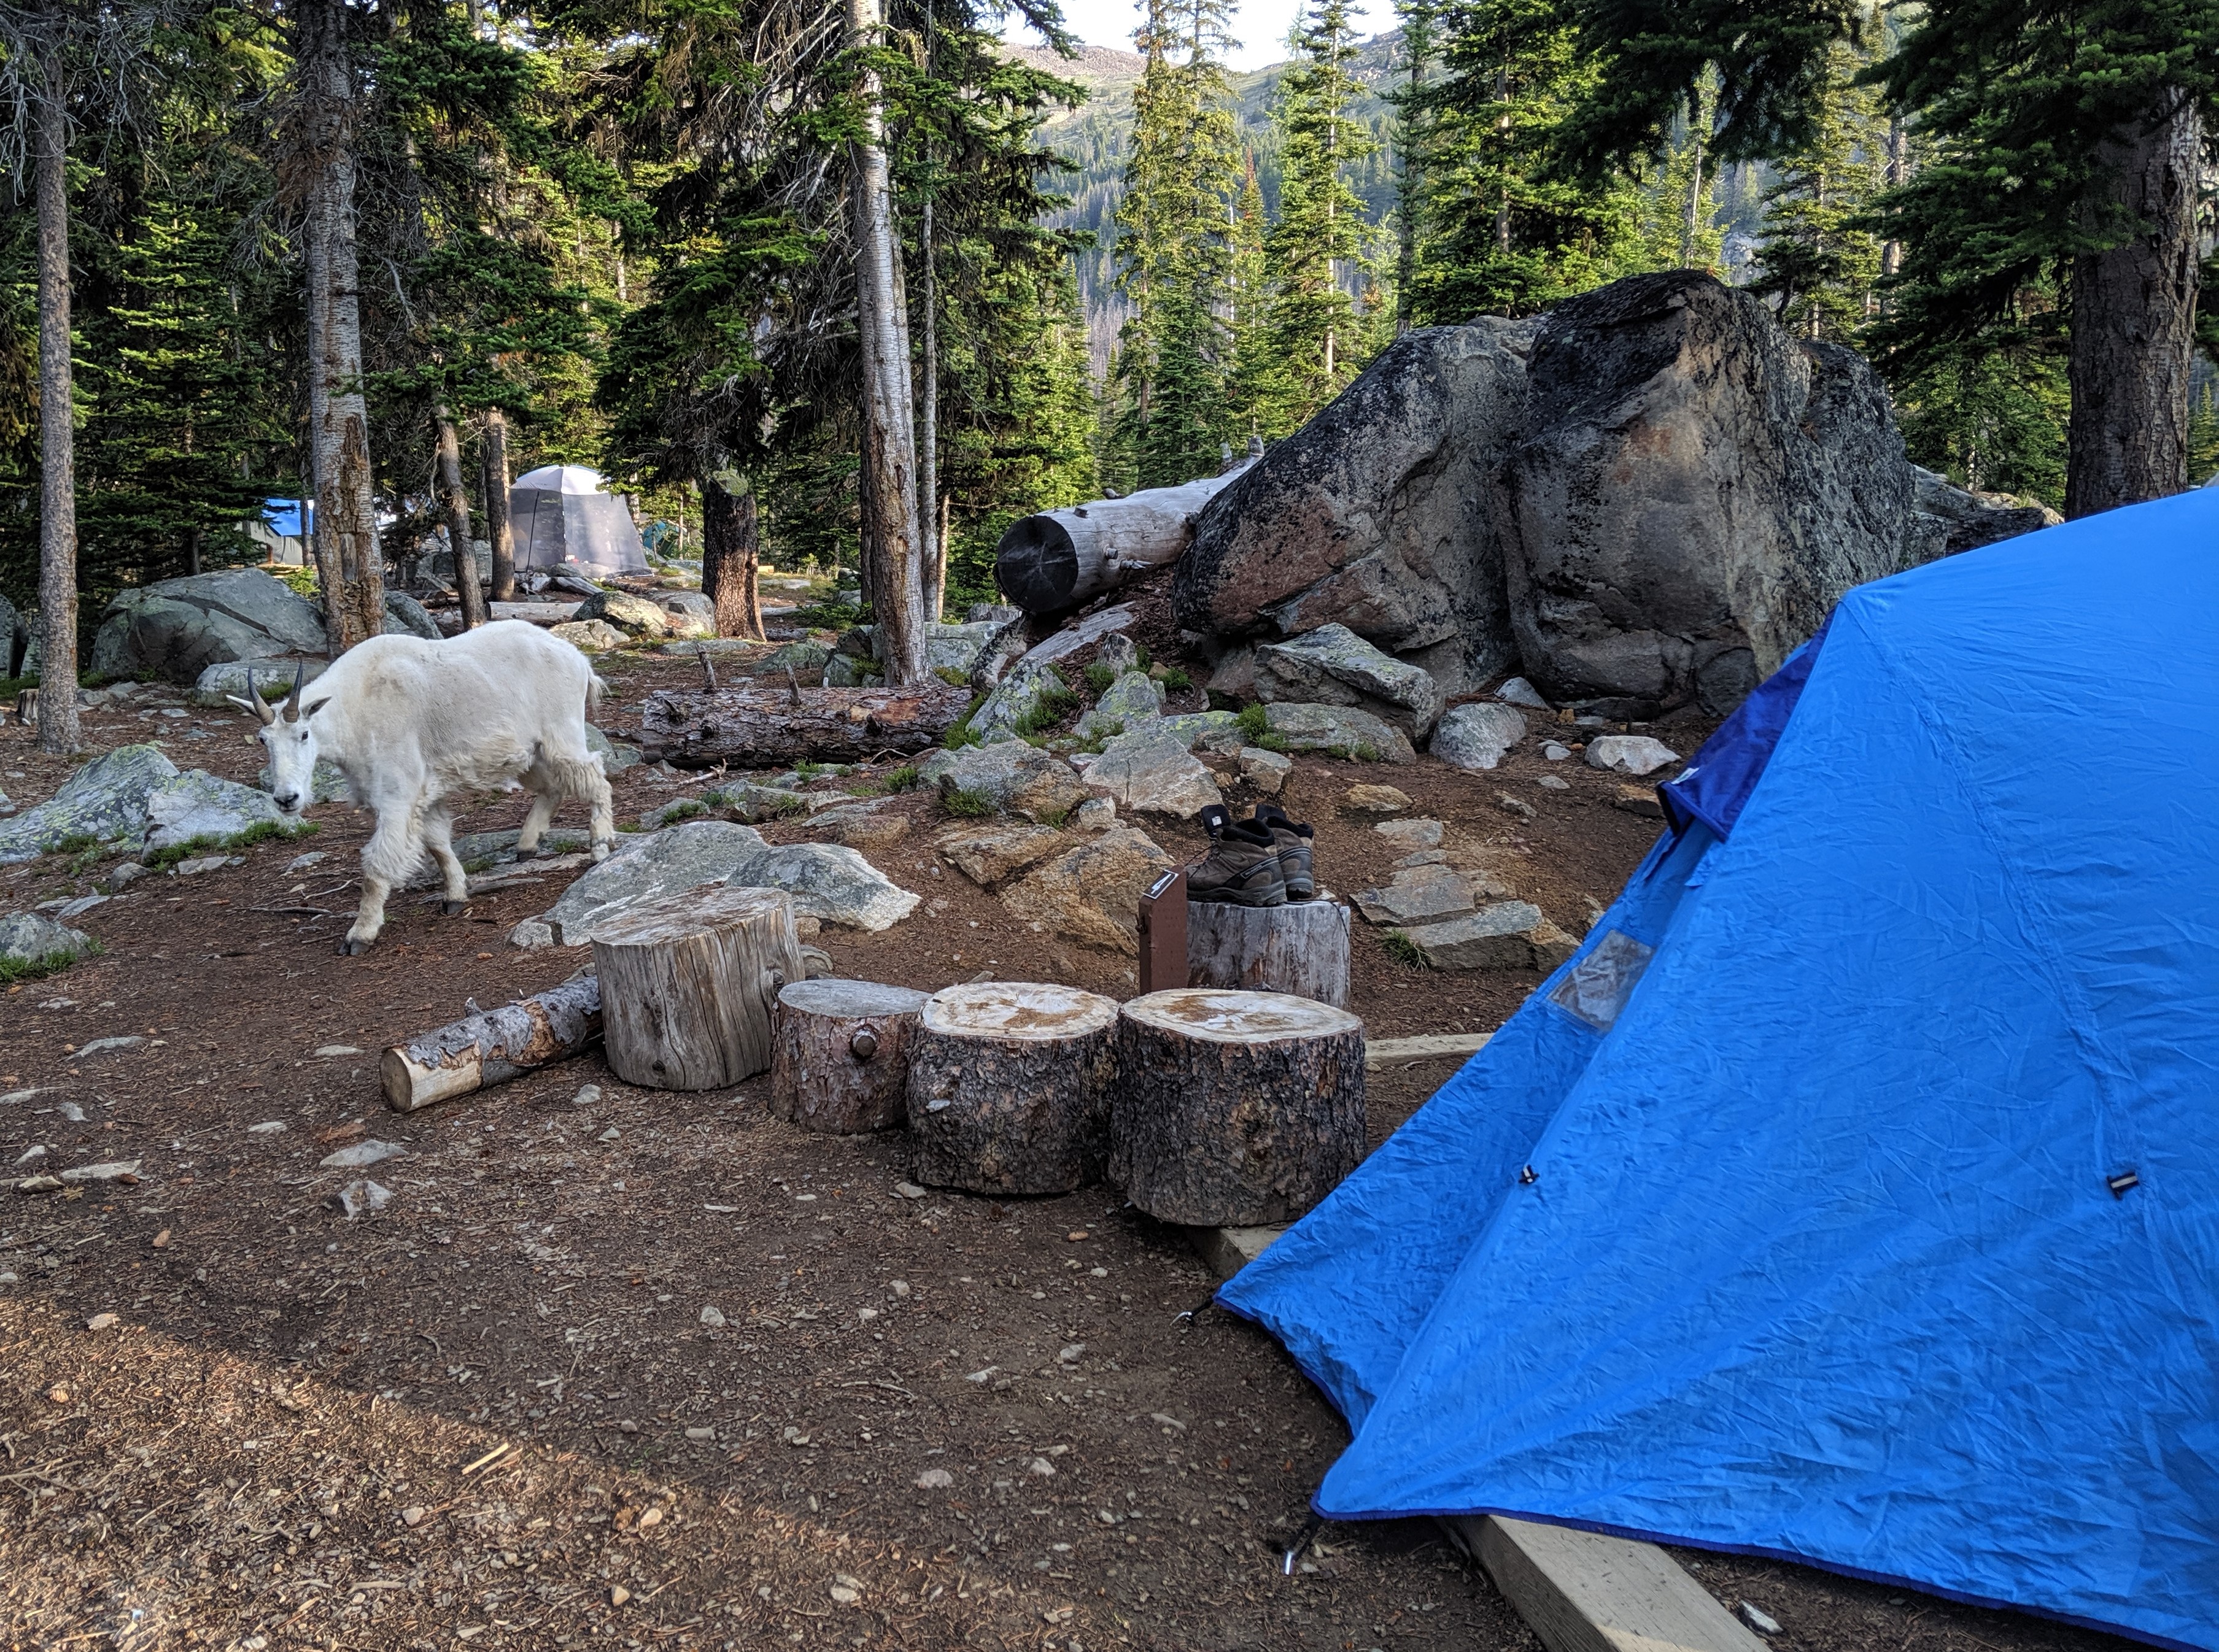 Mountain goat near a campsite